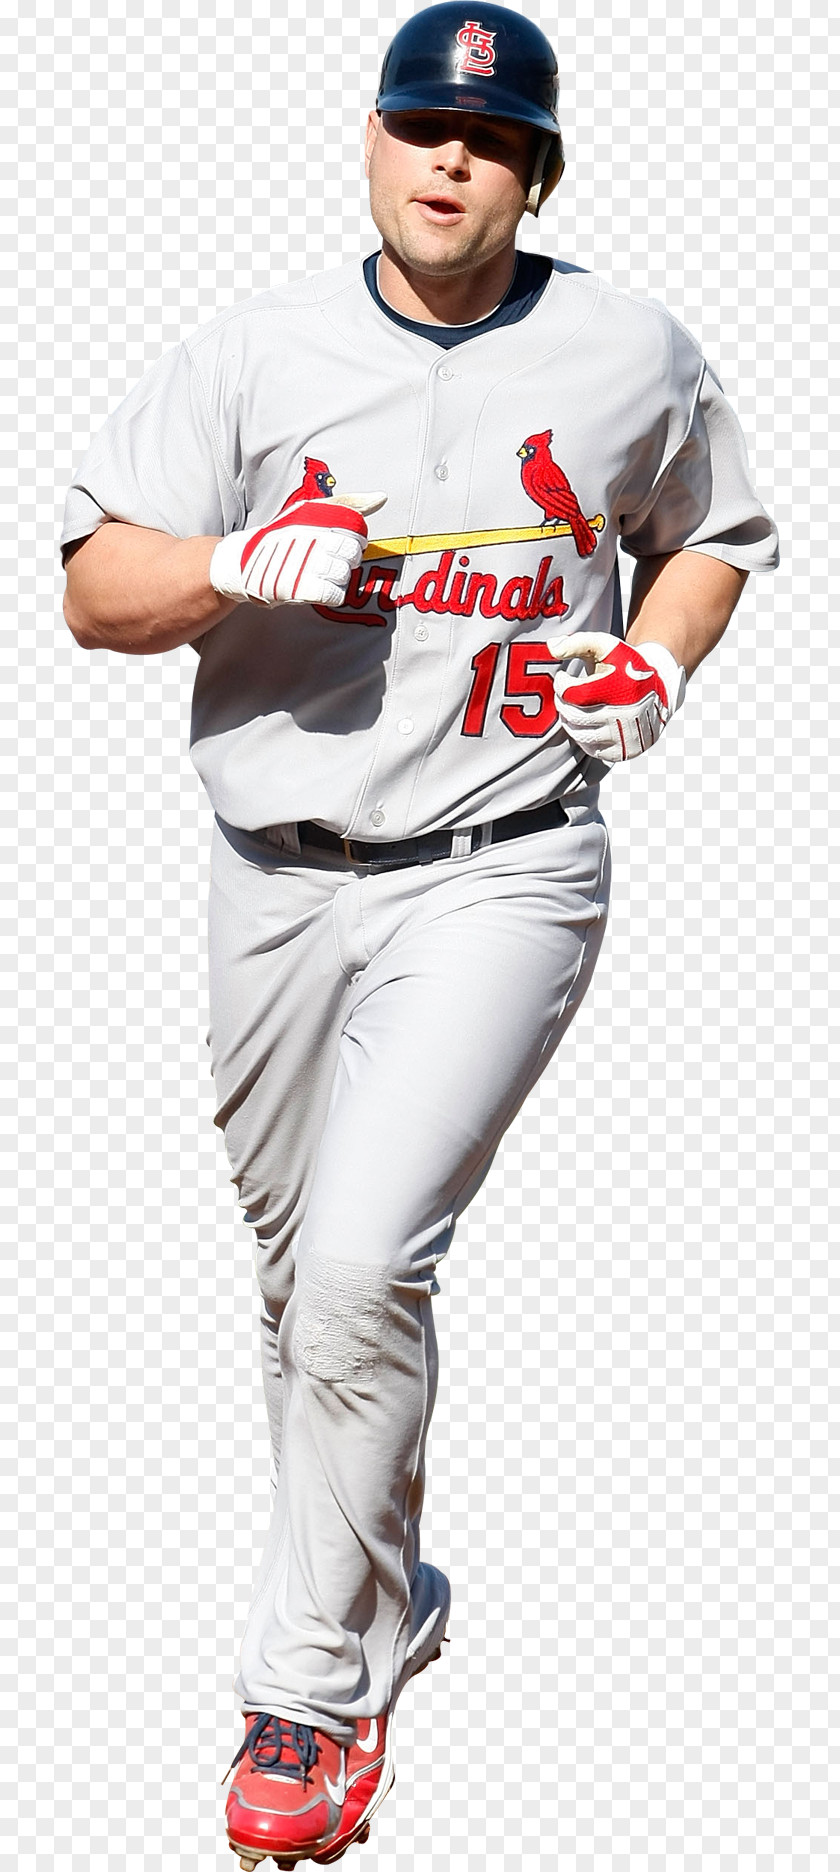 St Louis Pitcher Baseball Uniform St. Cardinals Alumni PNG